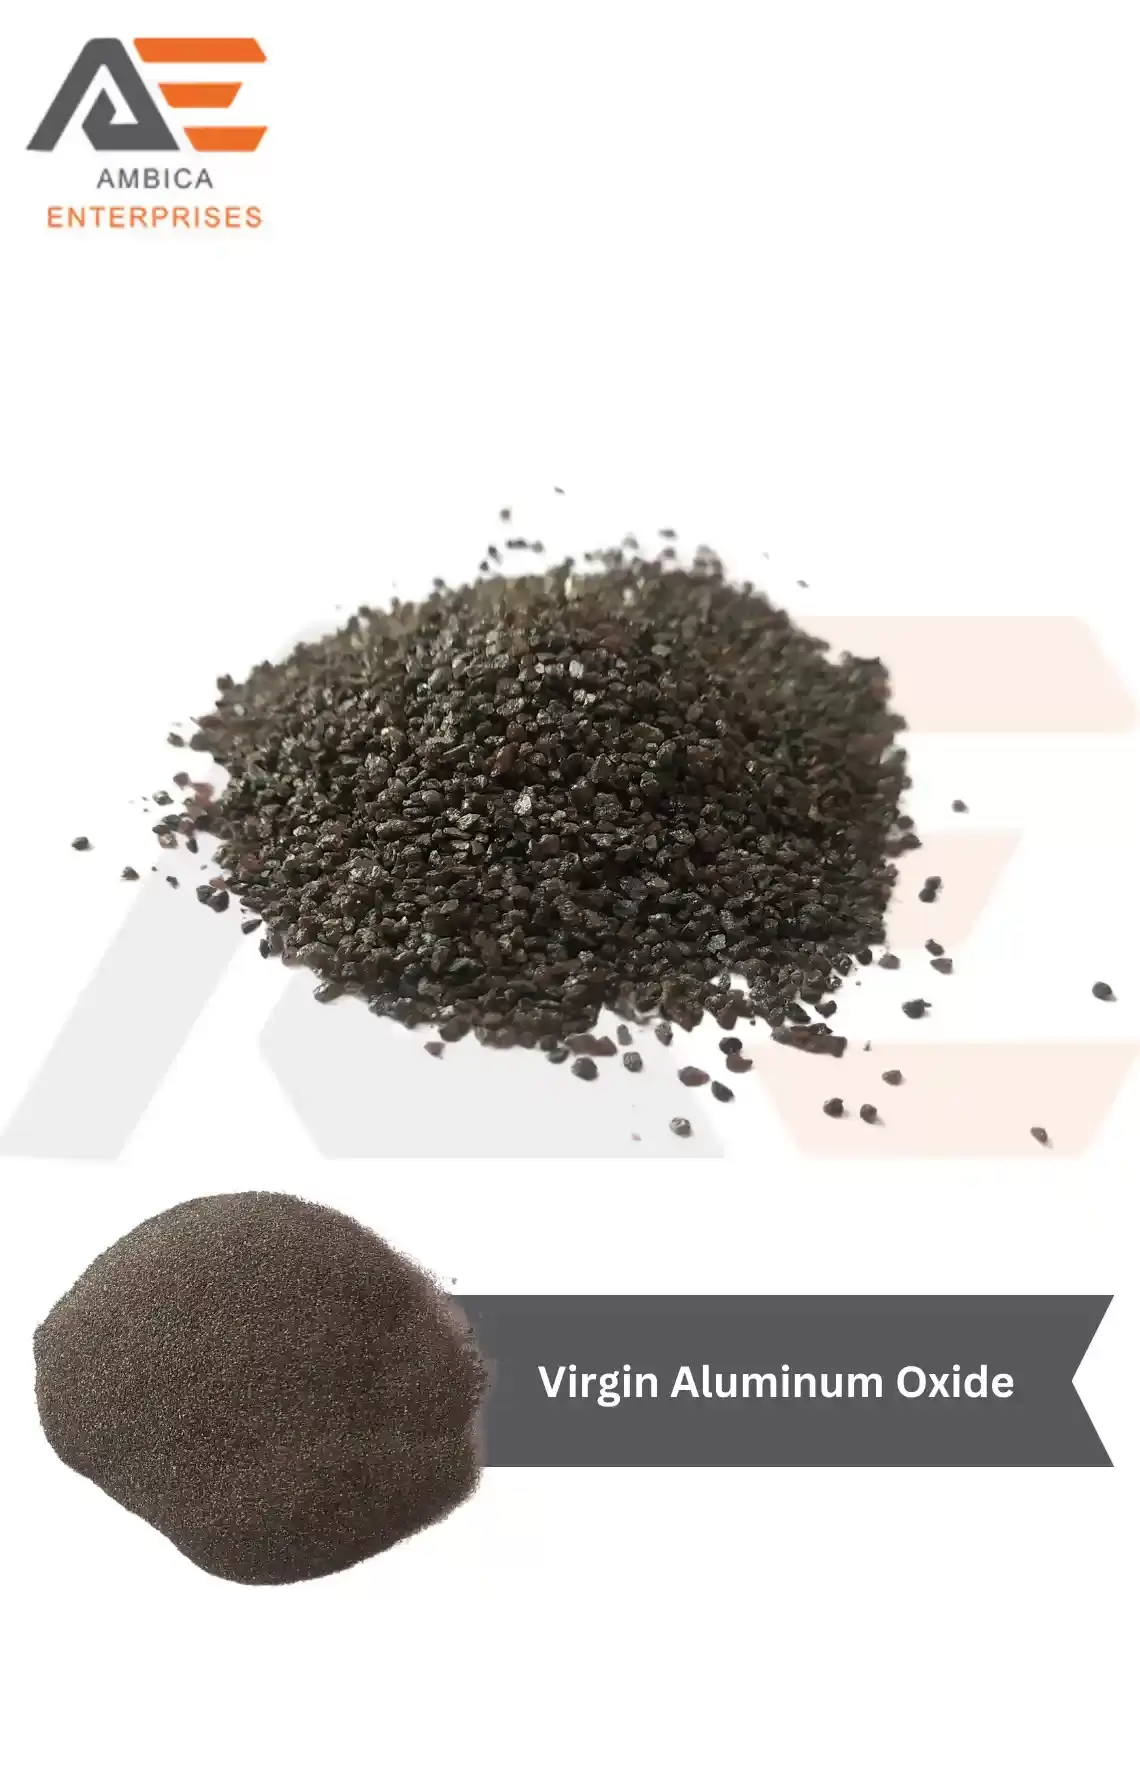 Virgin Aluminum Oxide